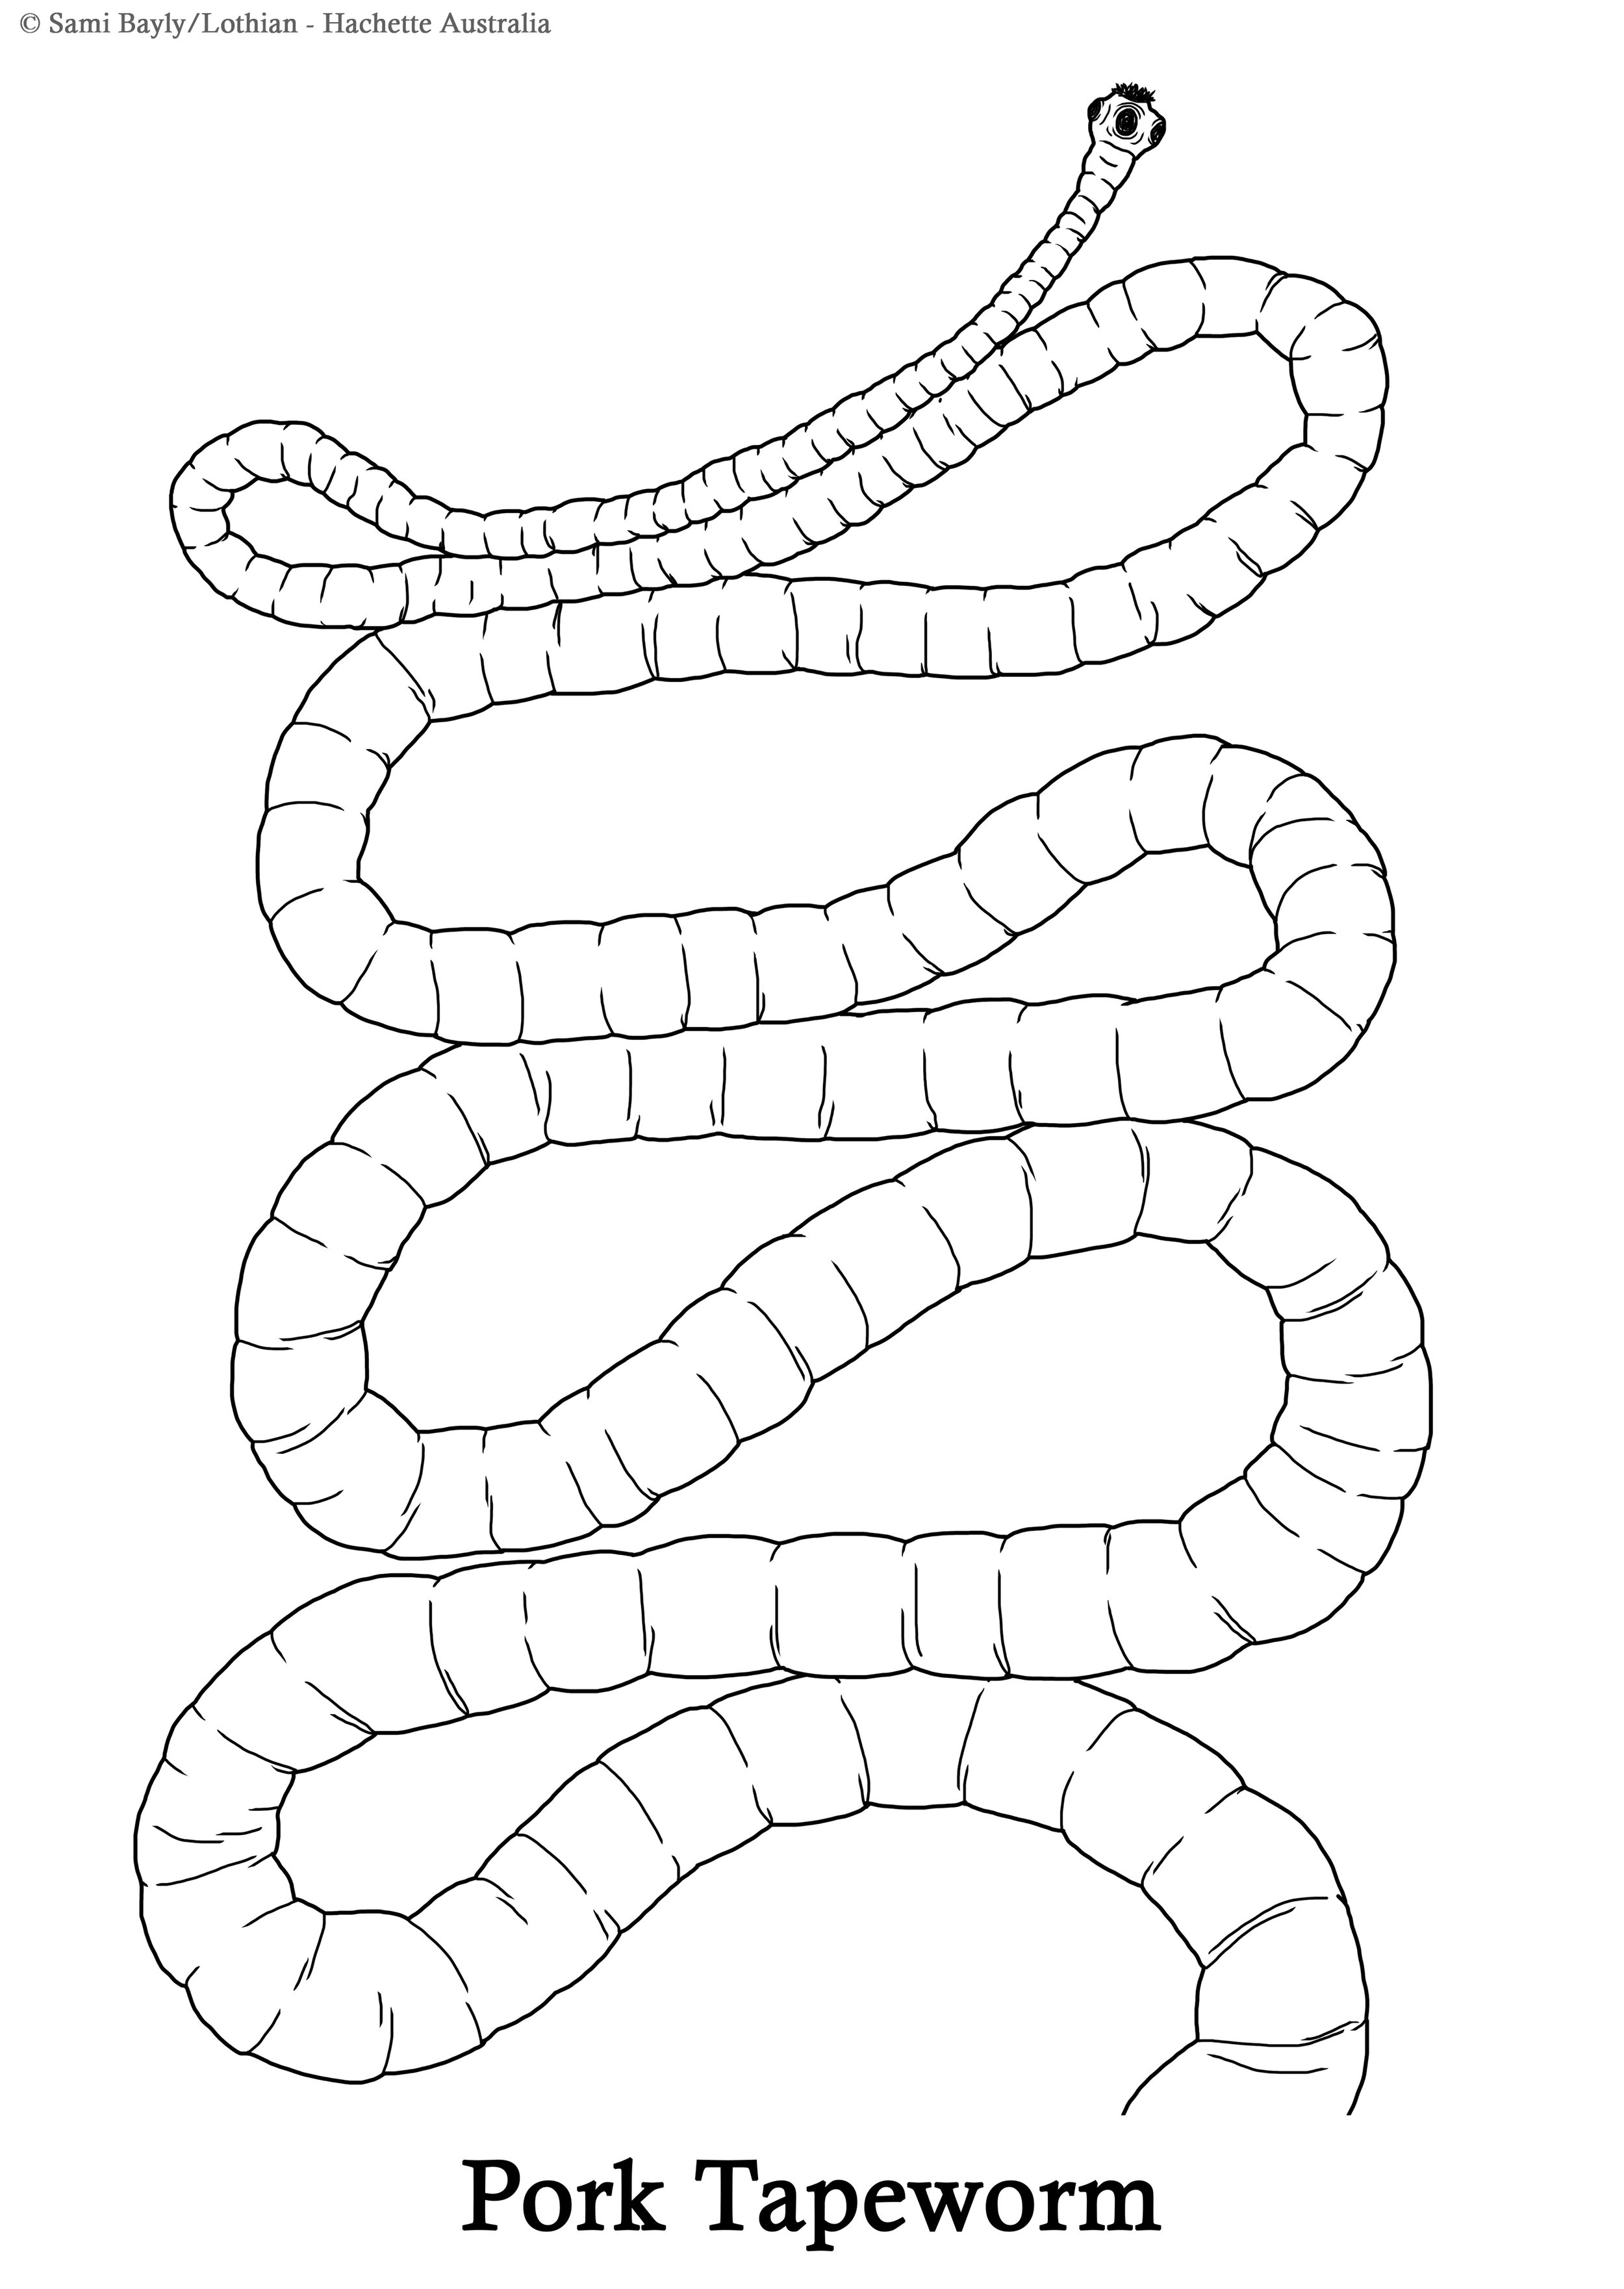 Pork Worm Line Drawing.jpg